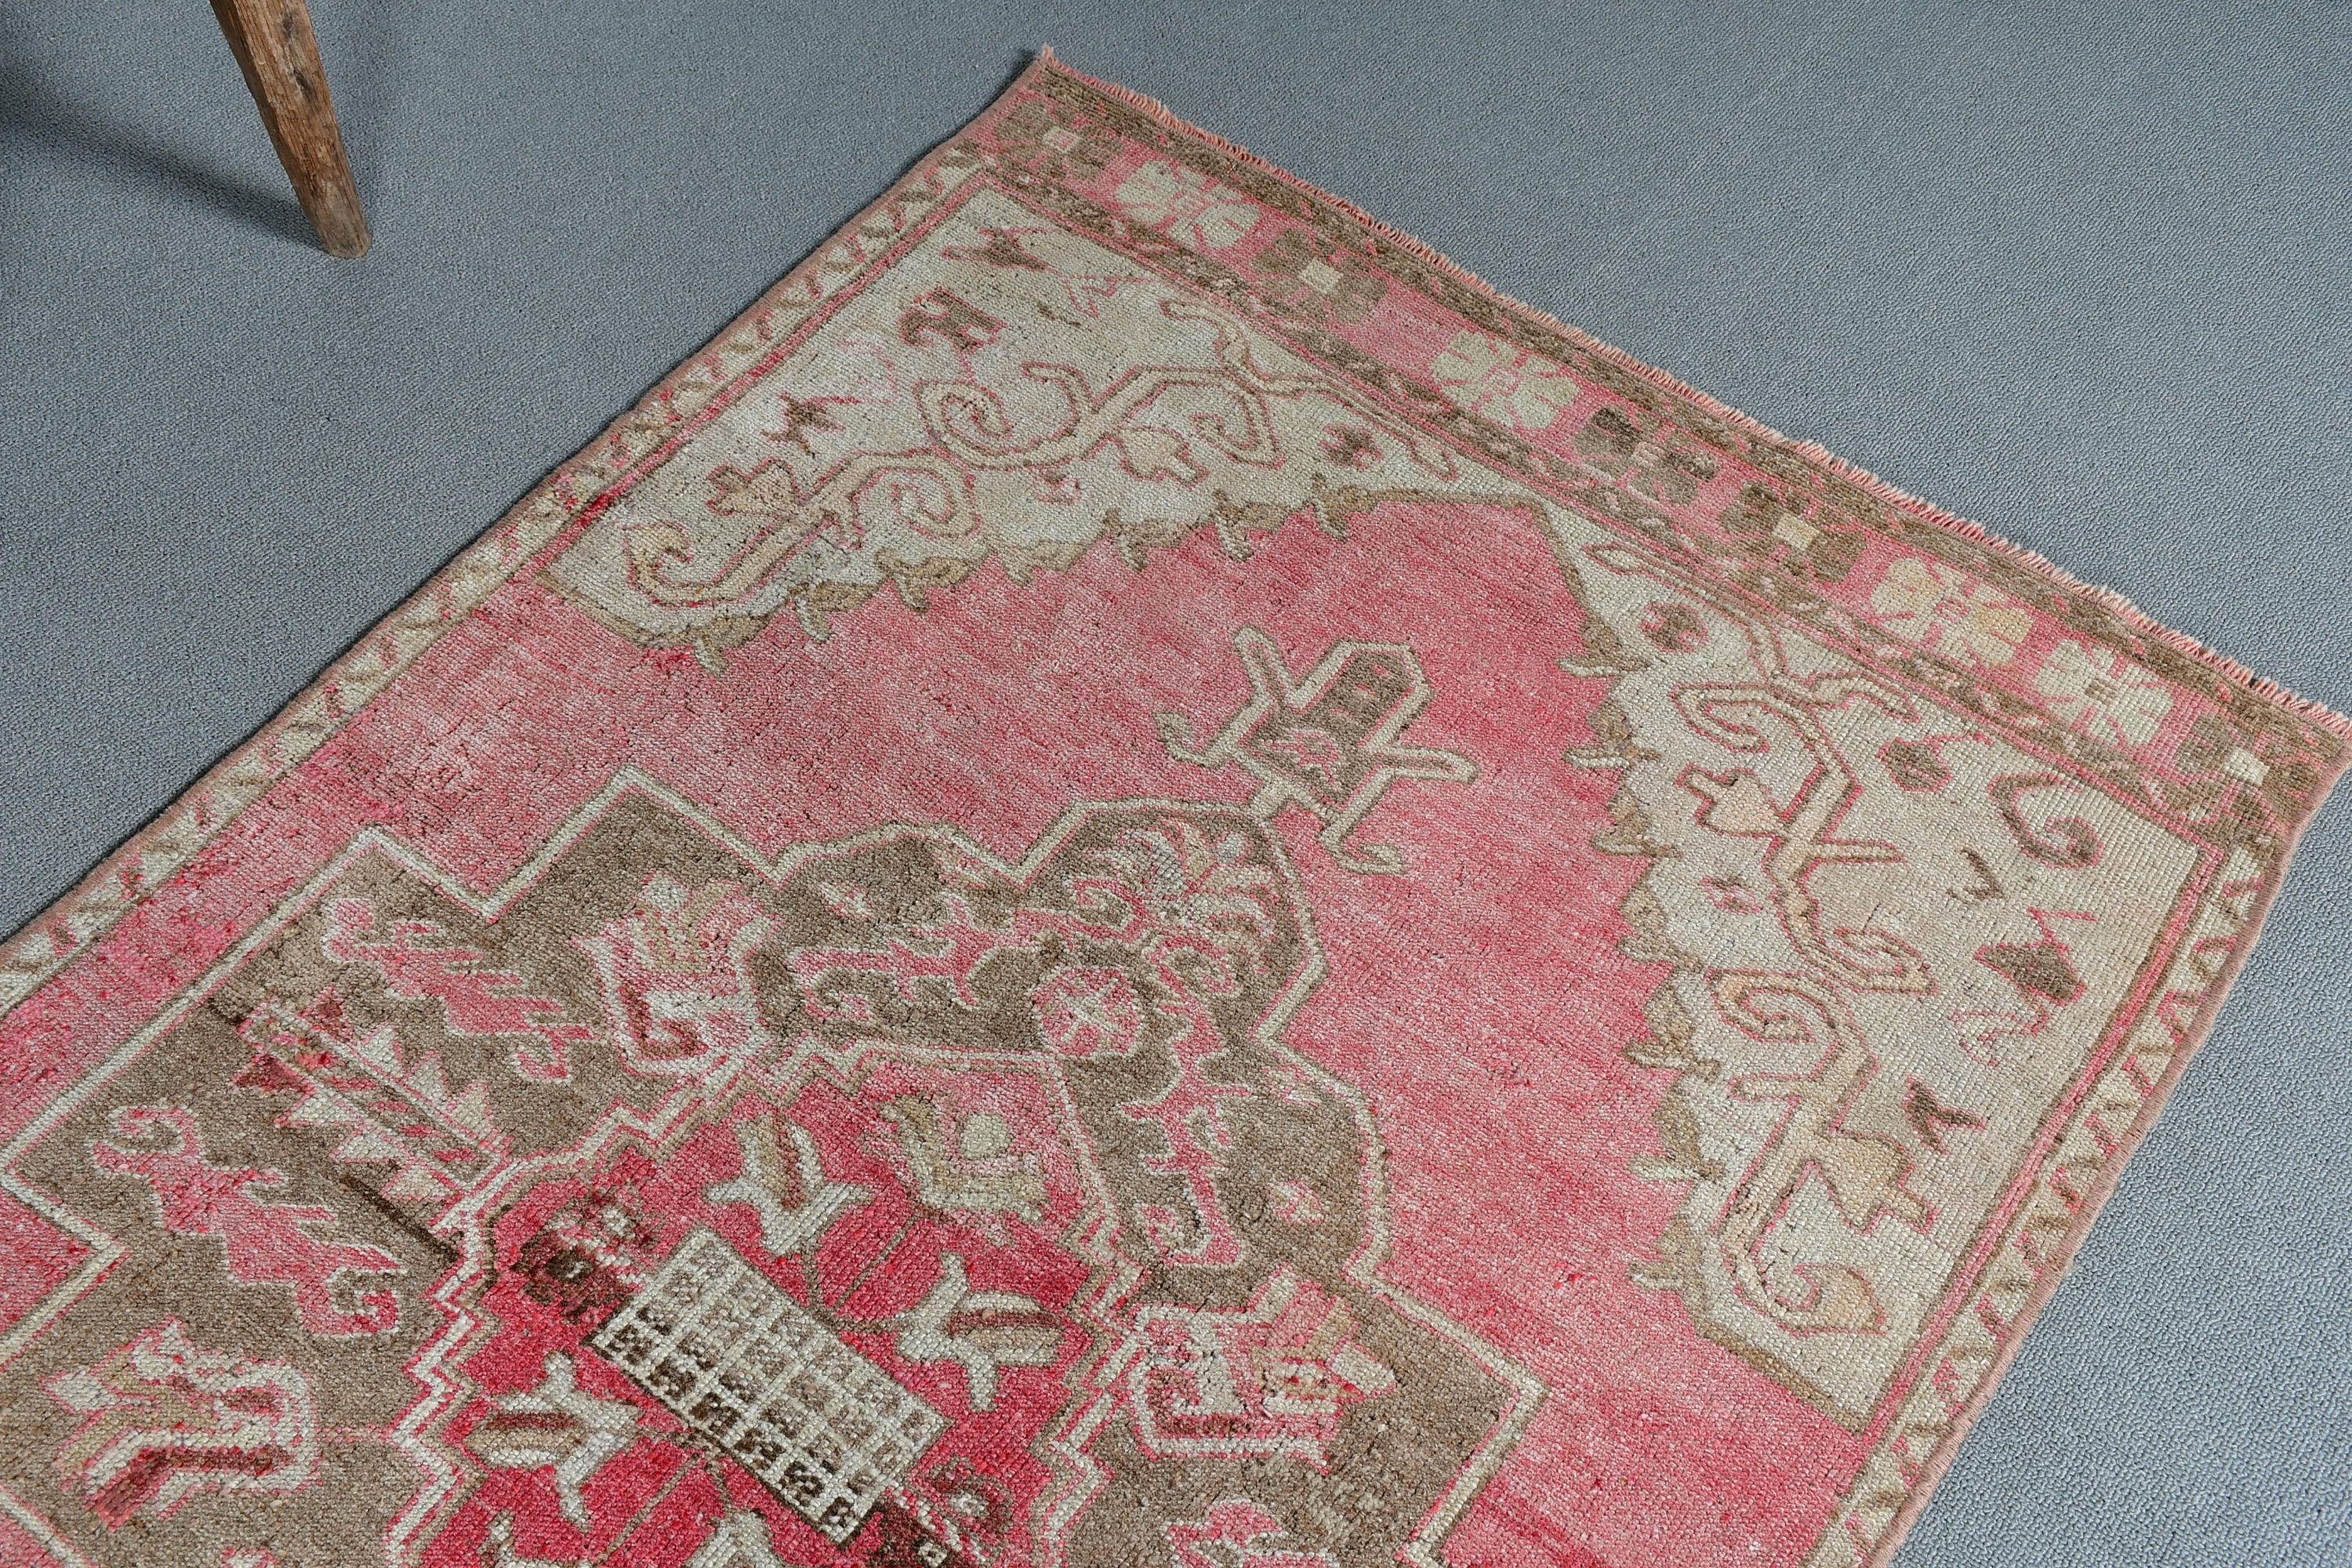 Pink Antique Rug, Corridor Rug, Floor Rug, Kitchen Rugs, Anatolian Rugs, 2.9x11.6 ft Runner Rugs, Wedding Rug, Vintage Rug, Turkish Rugs